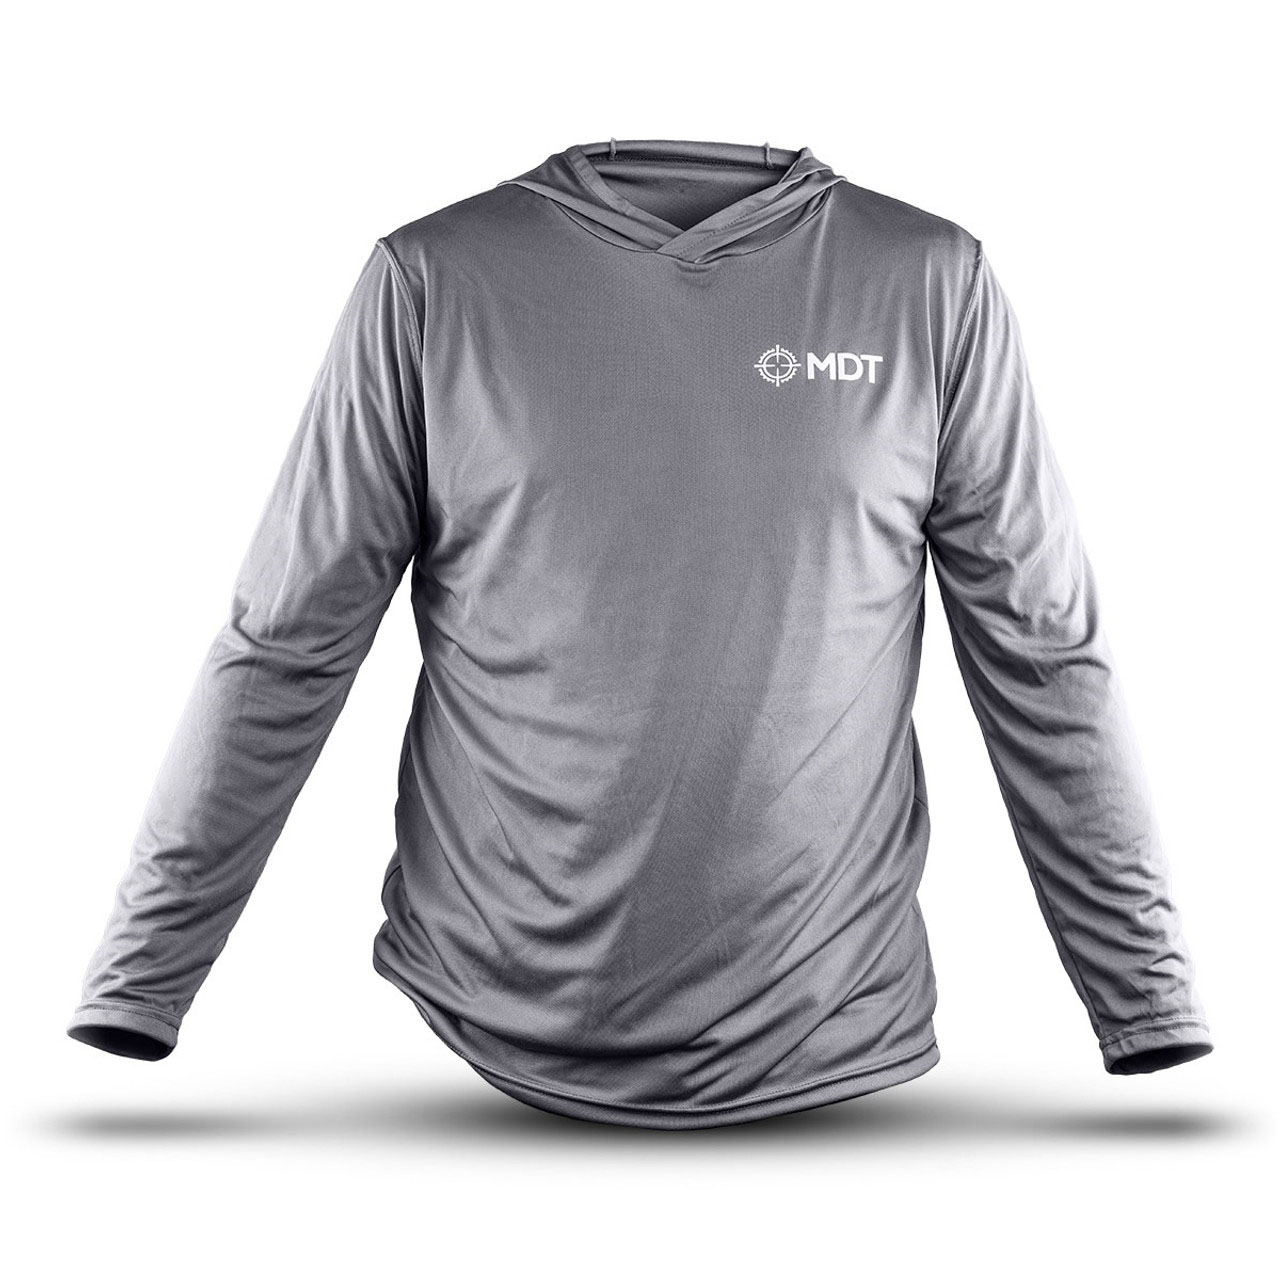 MDT Merchandise - MDT Sun Shirt Hoodies - Unisex - S - GRY